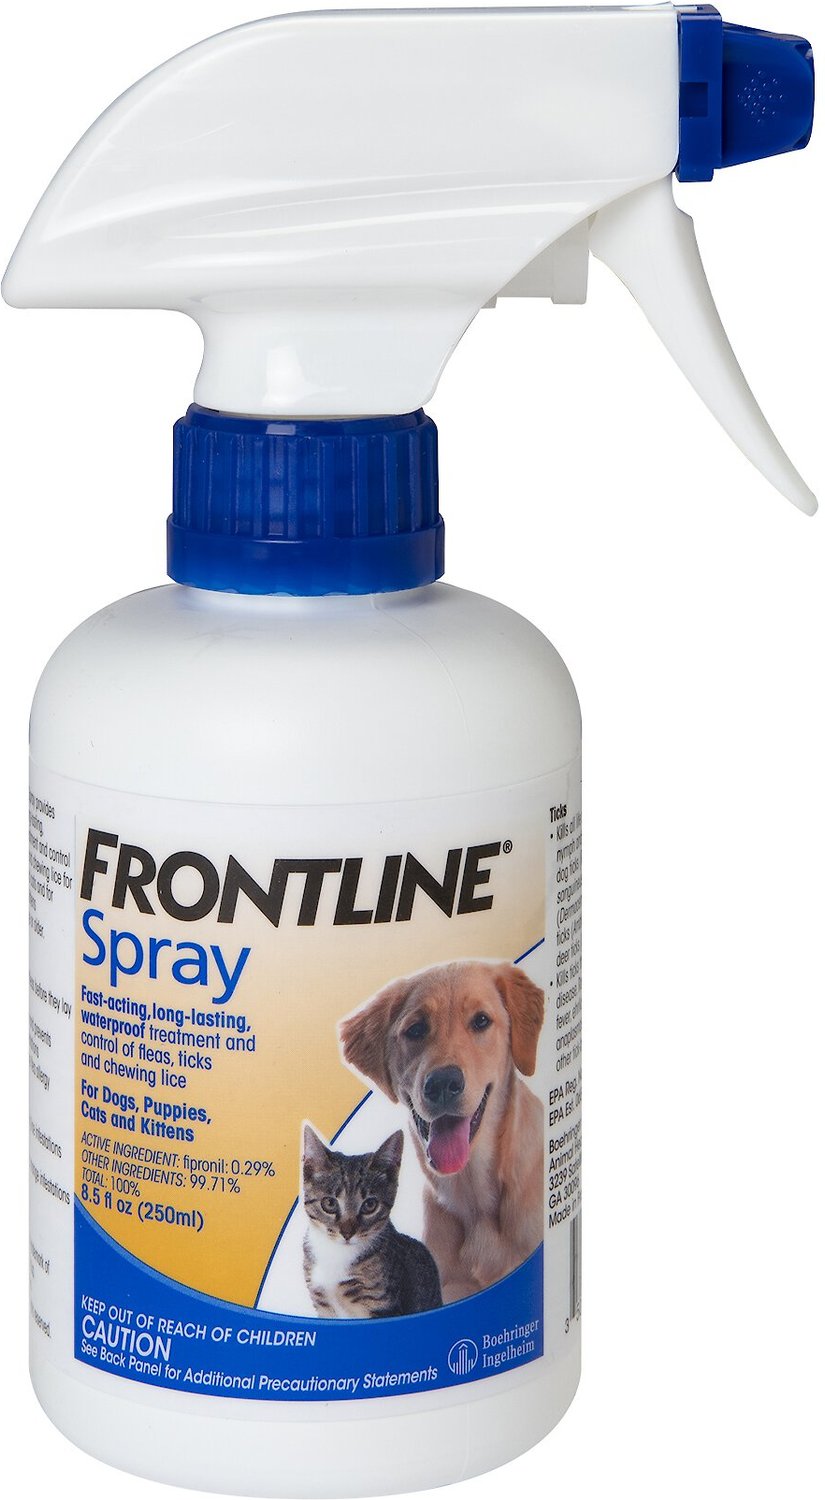 FRONTLINE Flea & Tick Spray for Dogs & Cats, 250mL bottle